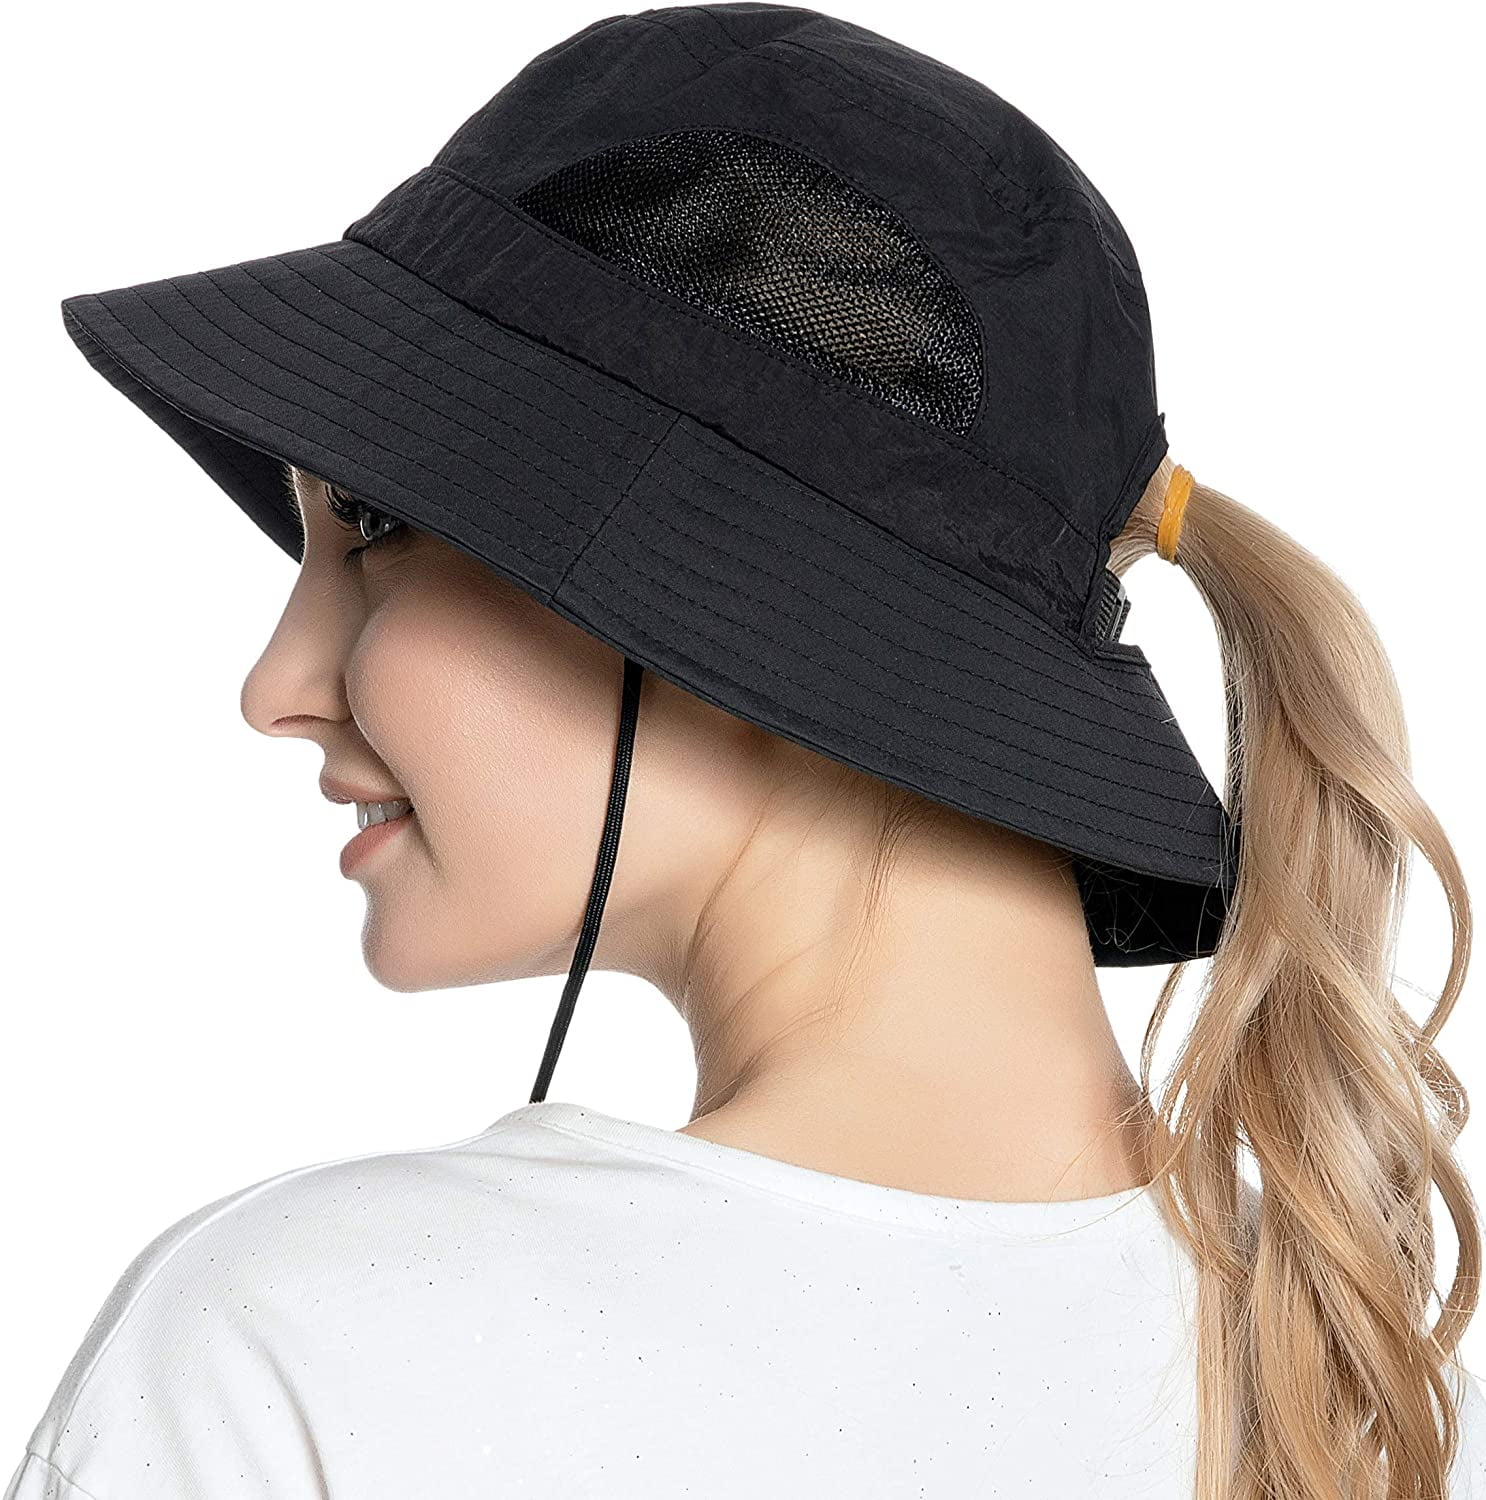 Breathable Packable Mesh Baseball Cap FADA Quick Dry Outdoor Sun Hat for Fishing Hiking Safari Travel UPF 50 